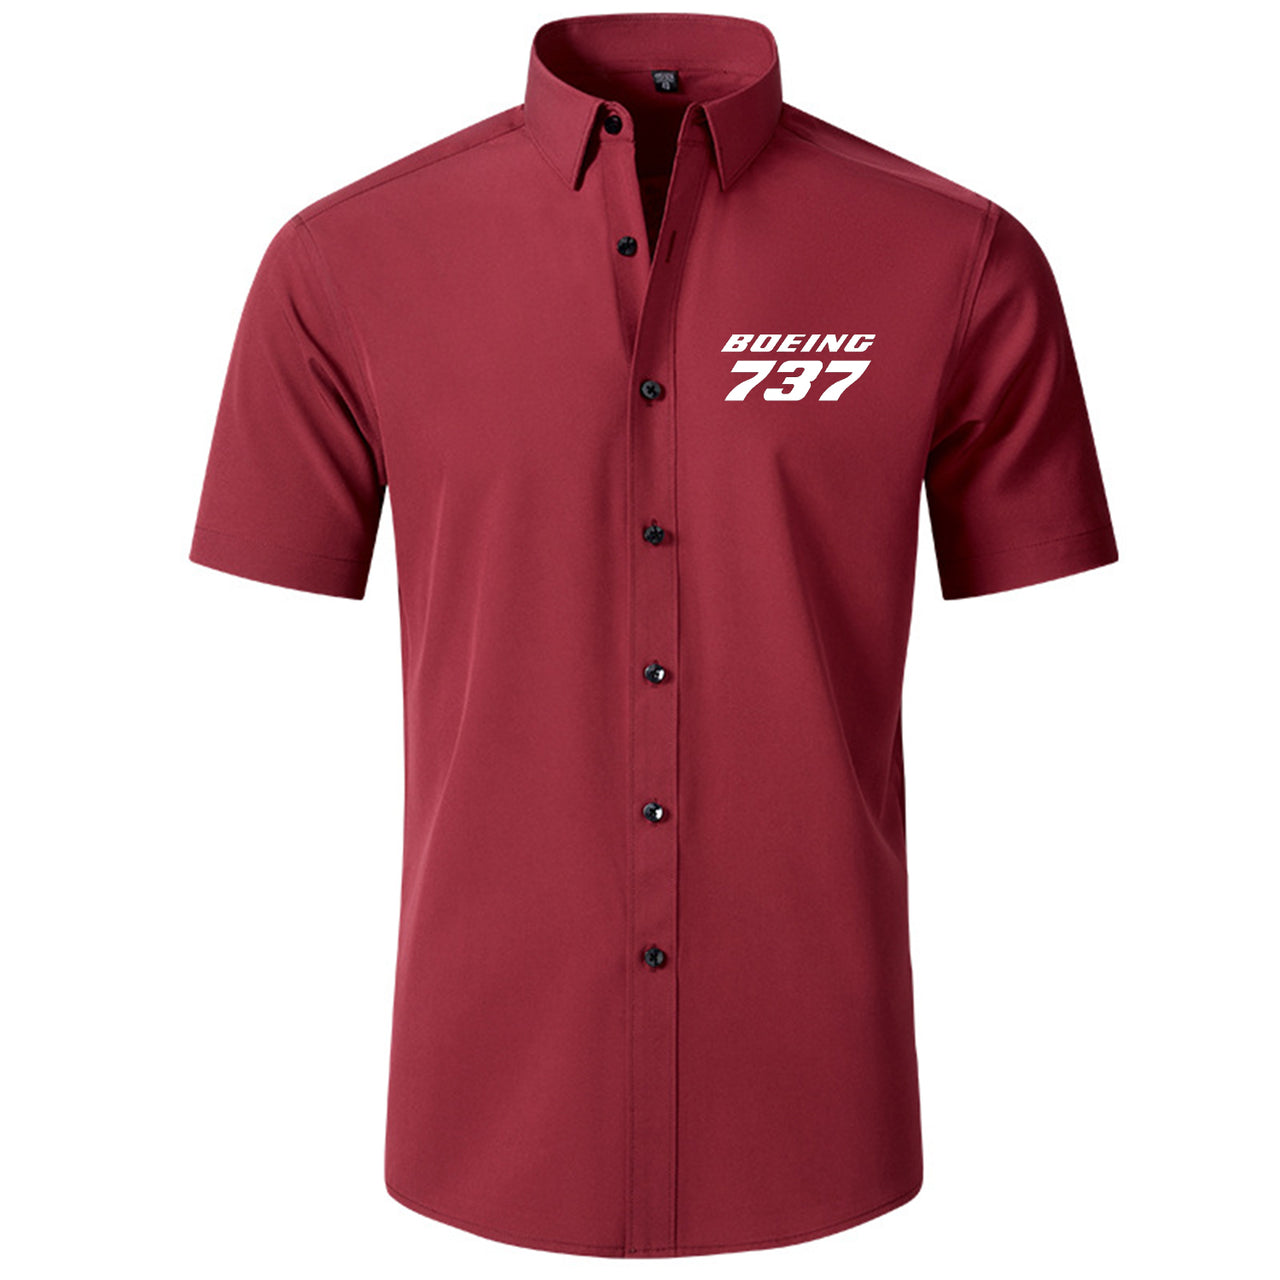 Boeing 737 & Text Designed Short Sleeve Shirts